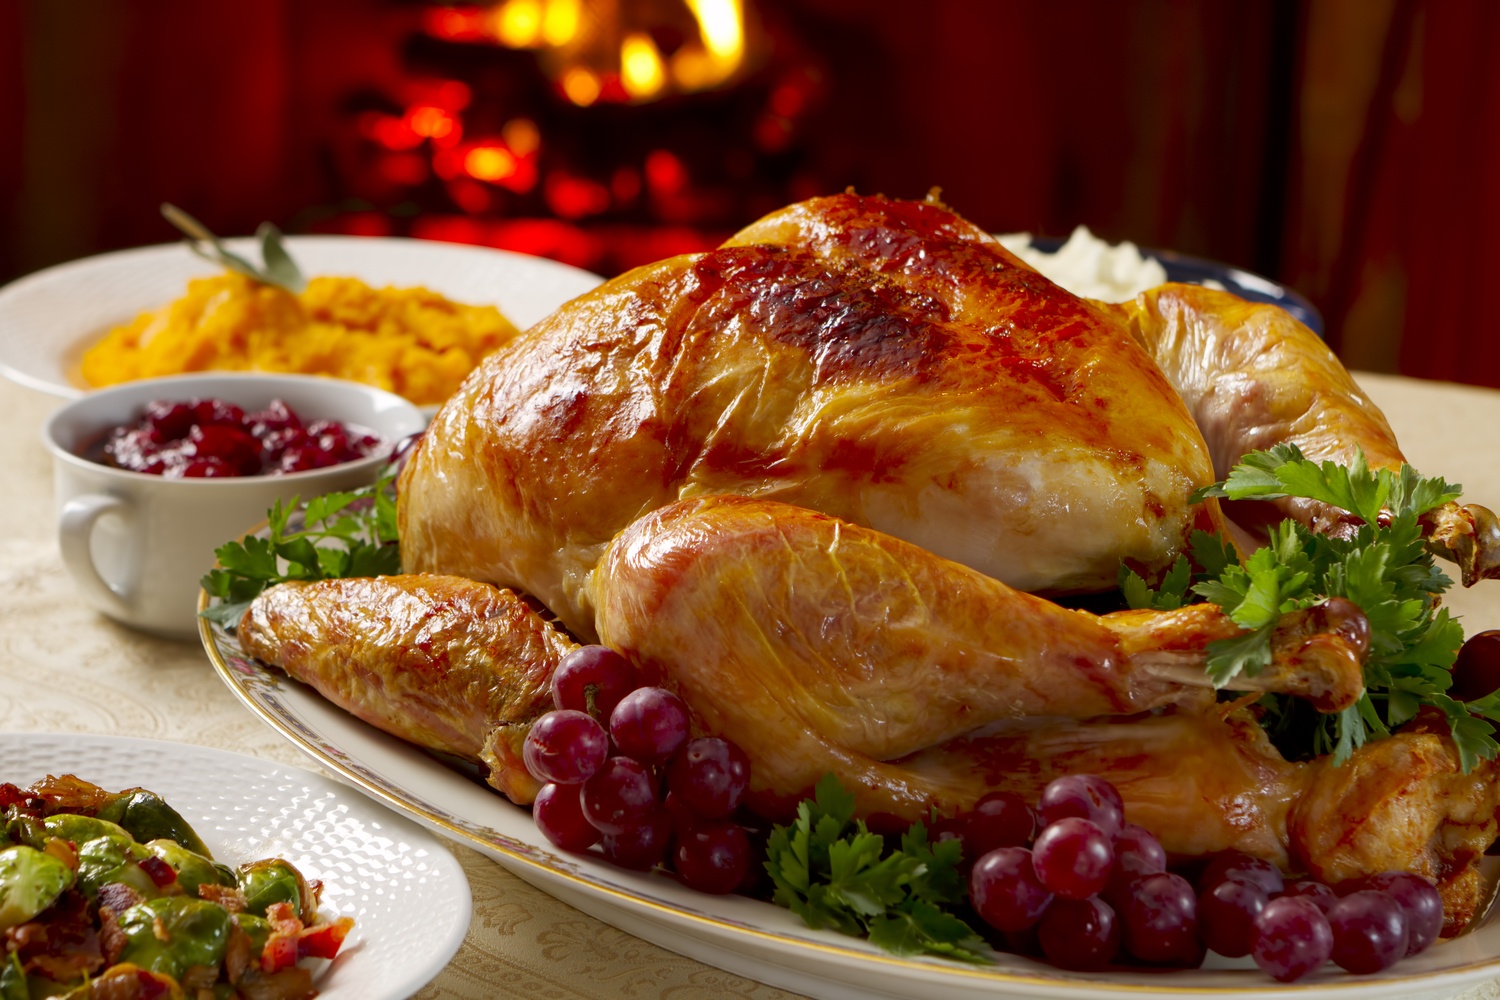 Cooked turkey dinner istock 000018412307 double